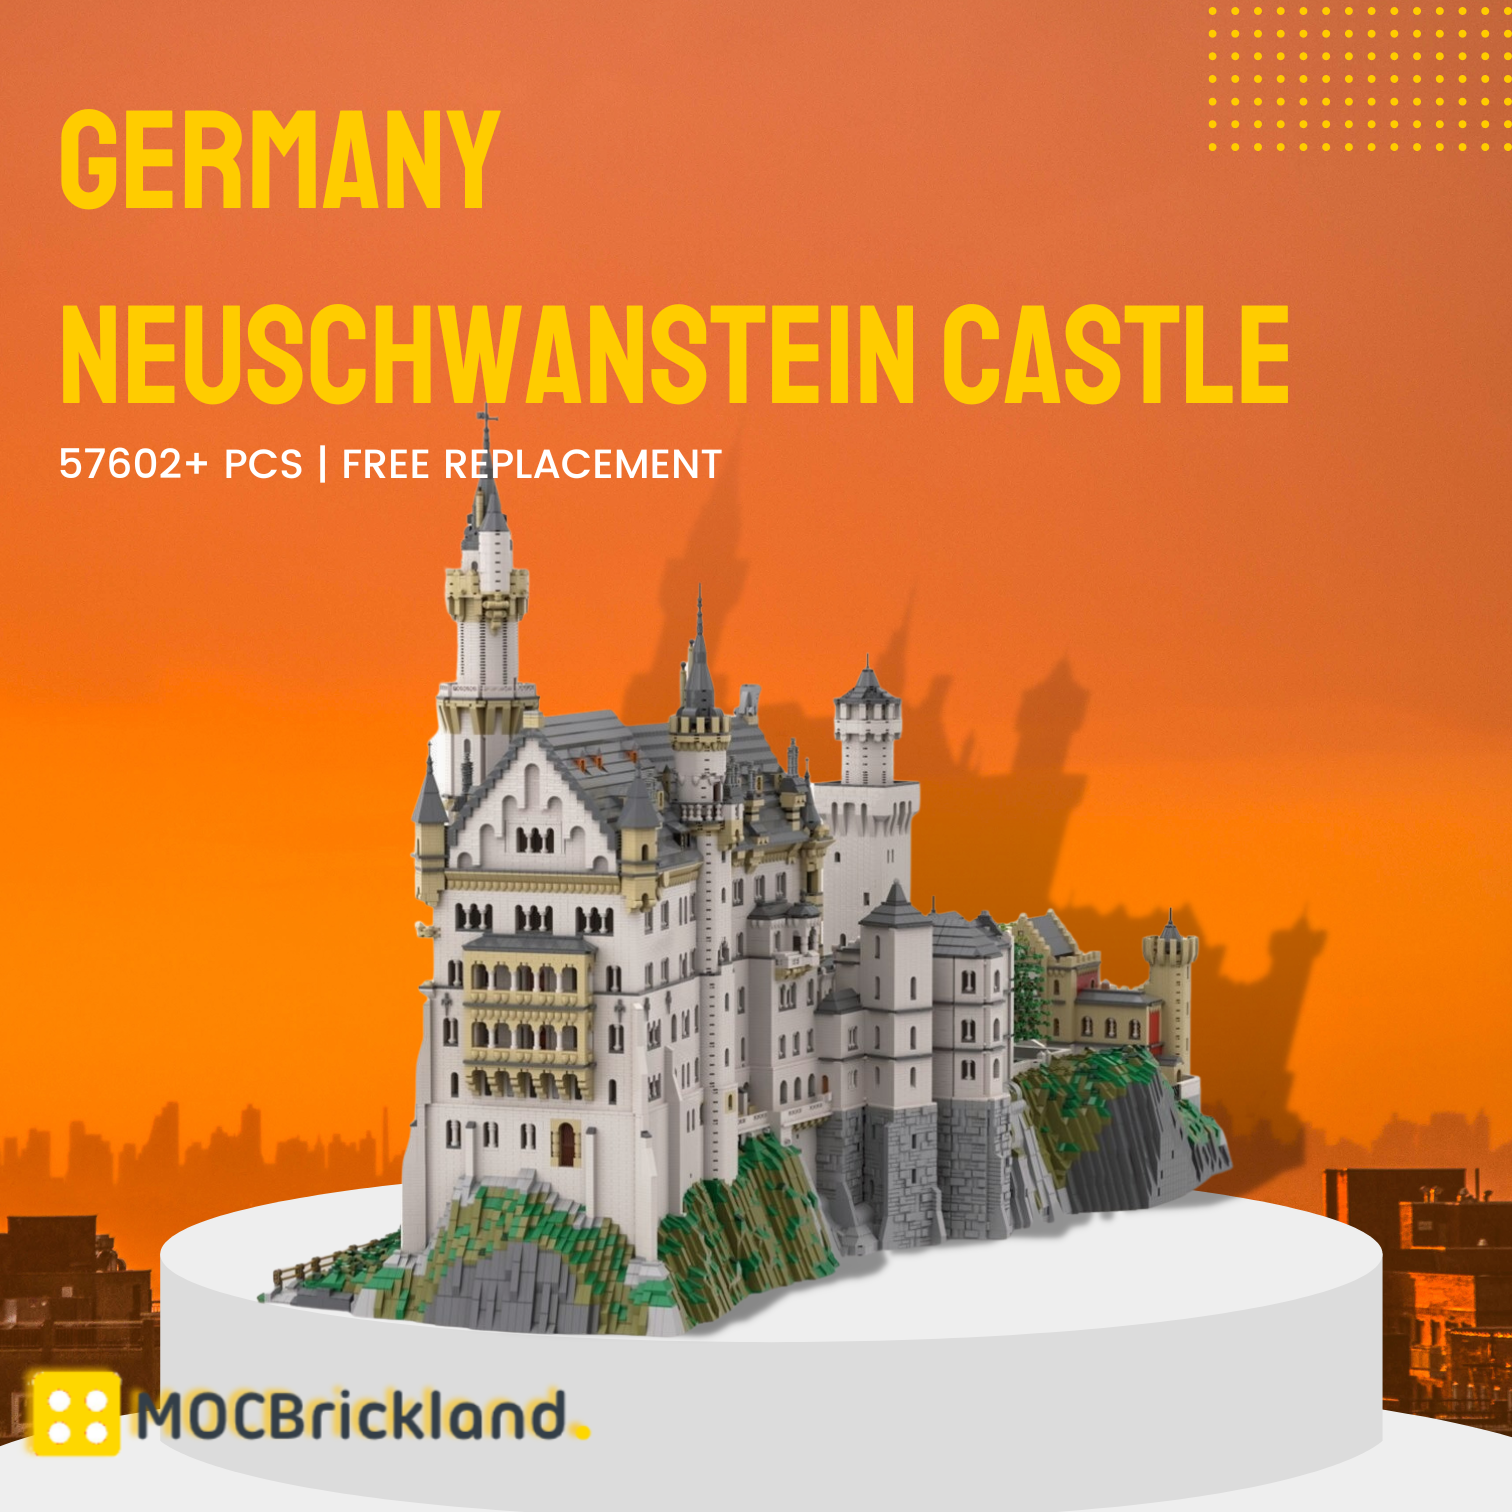 Germany Neuschwanstein Castle MOC-123380 Modular Building With 57602PCS